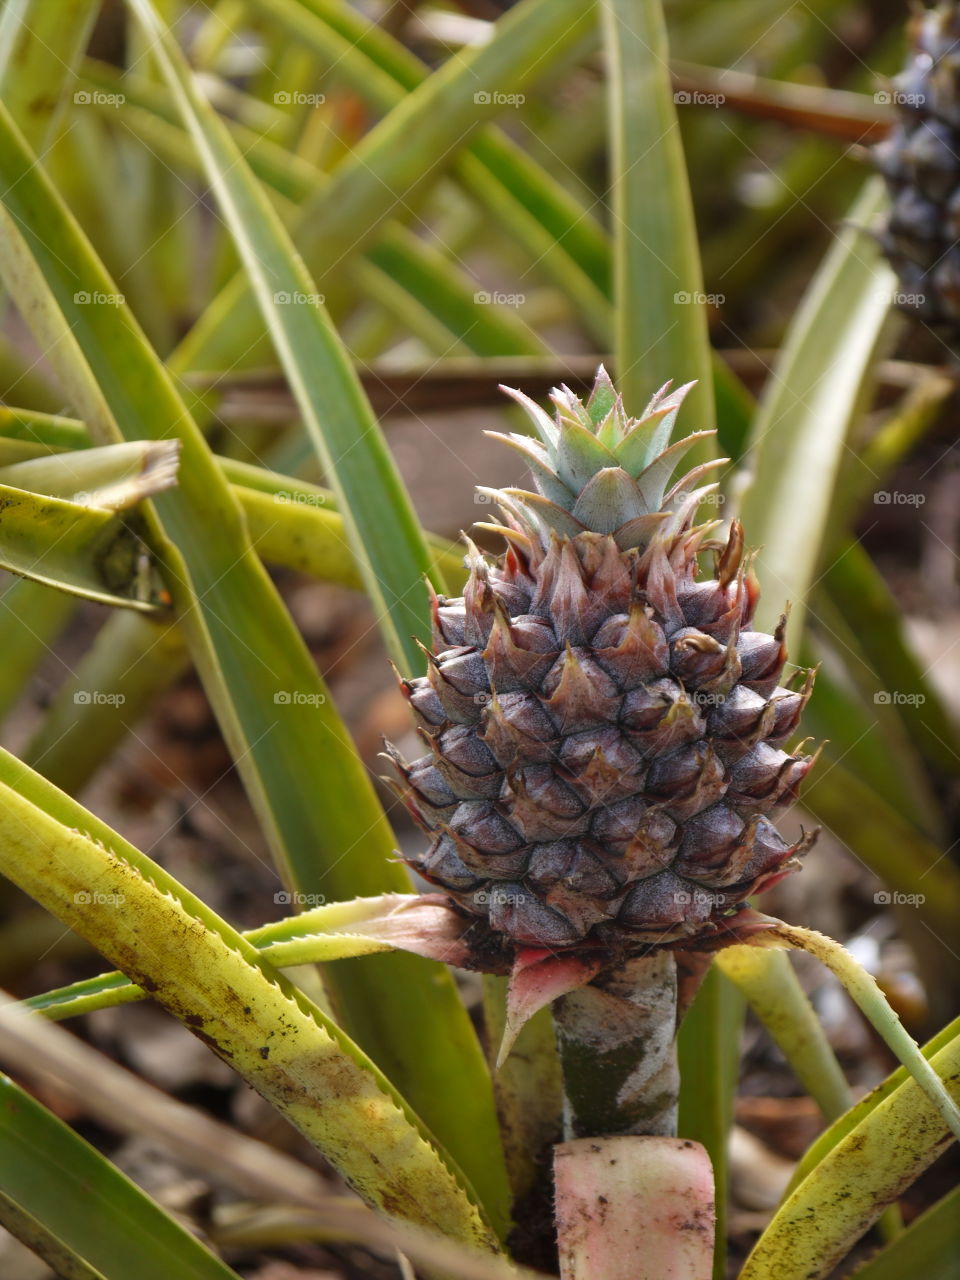 Baby Pineapple 